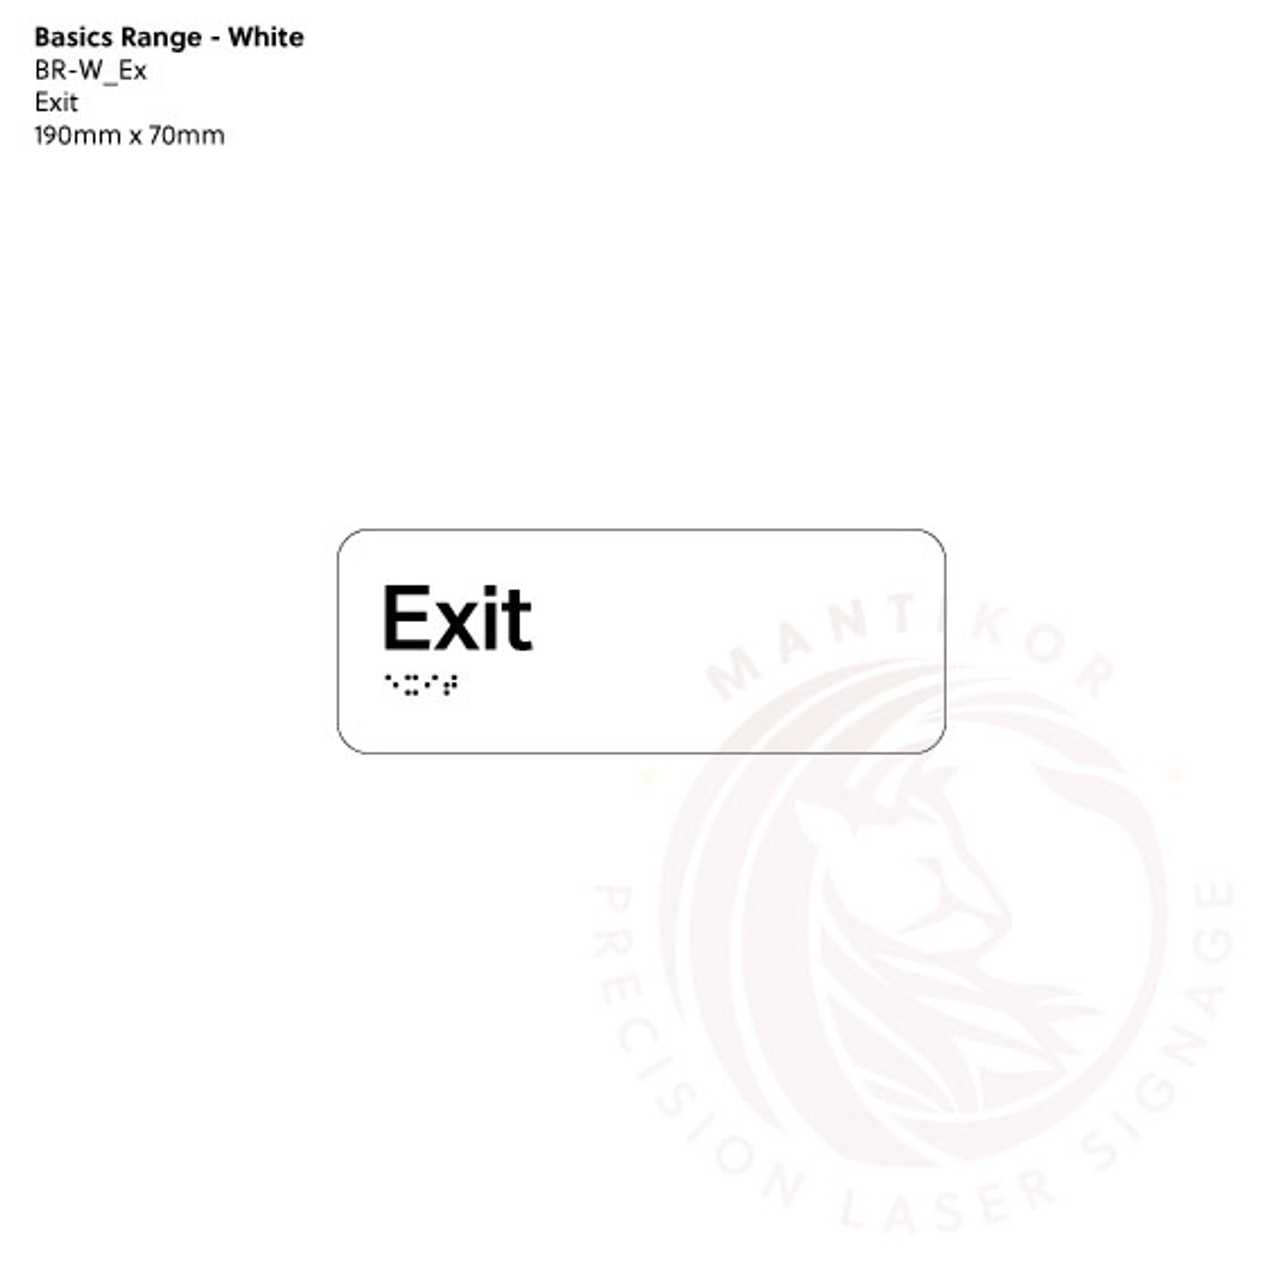 Basics Range - White Braille Signs - Exit